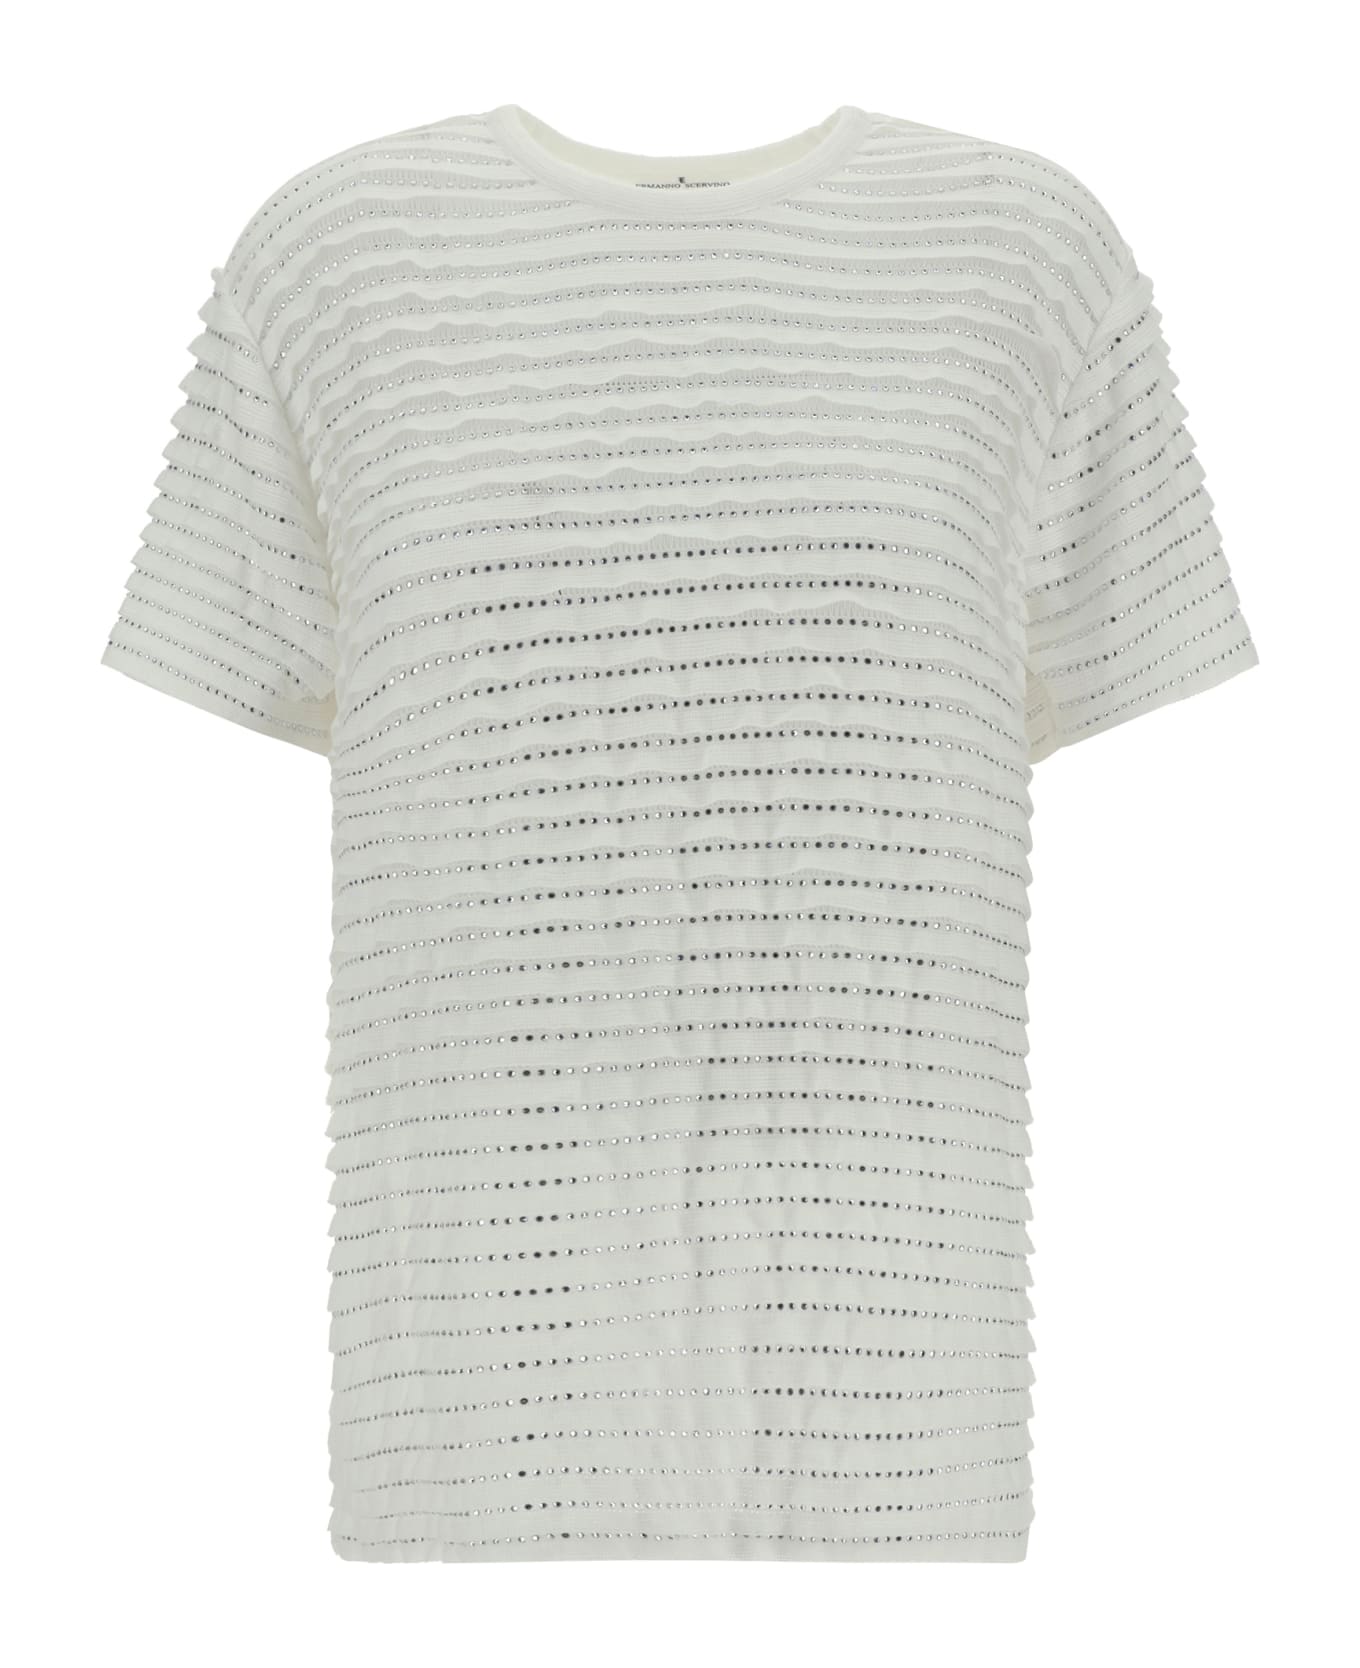 Ermanno Scervino T-shirt - Bianco